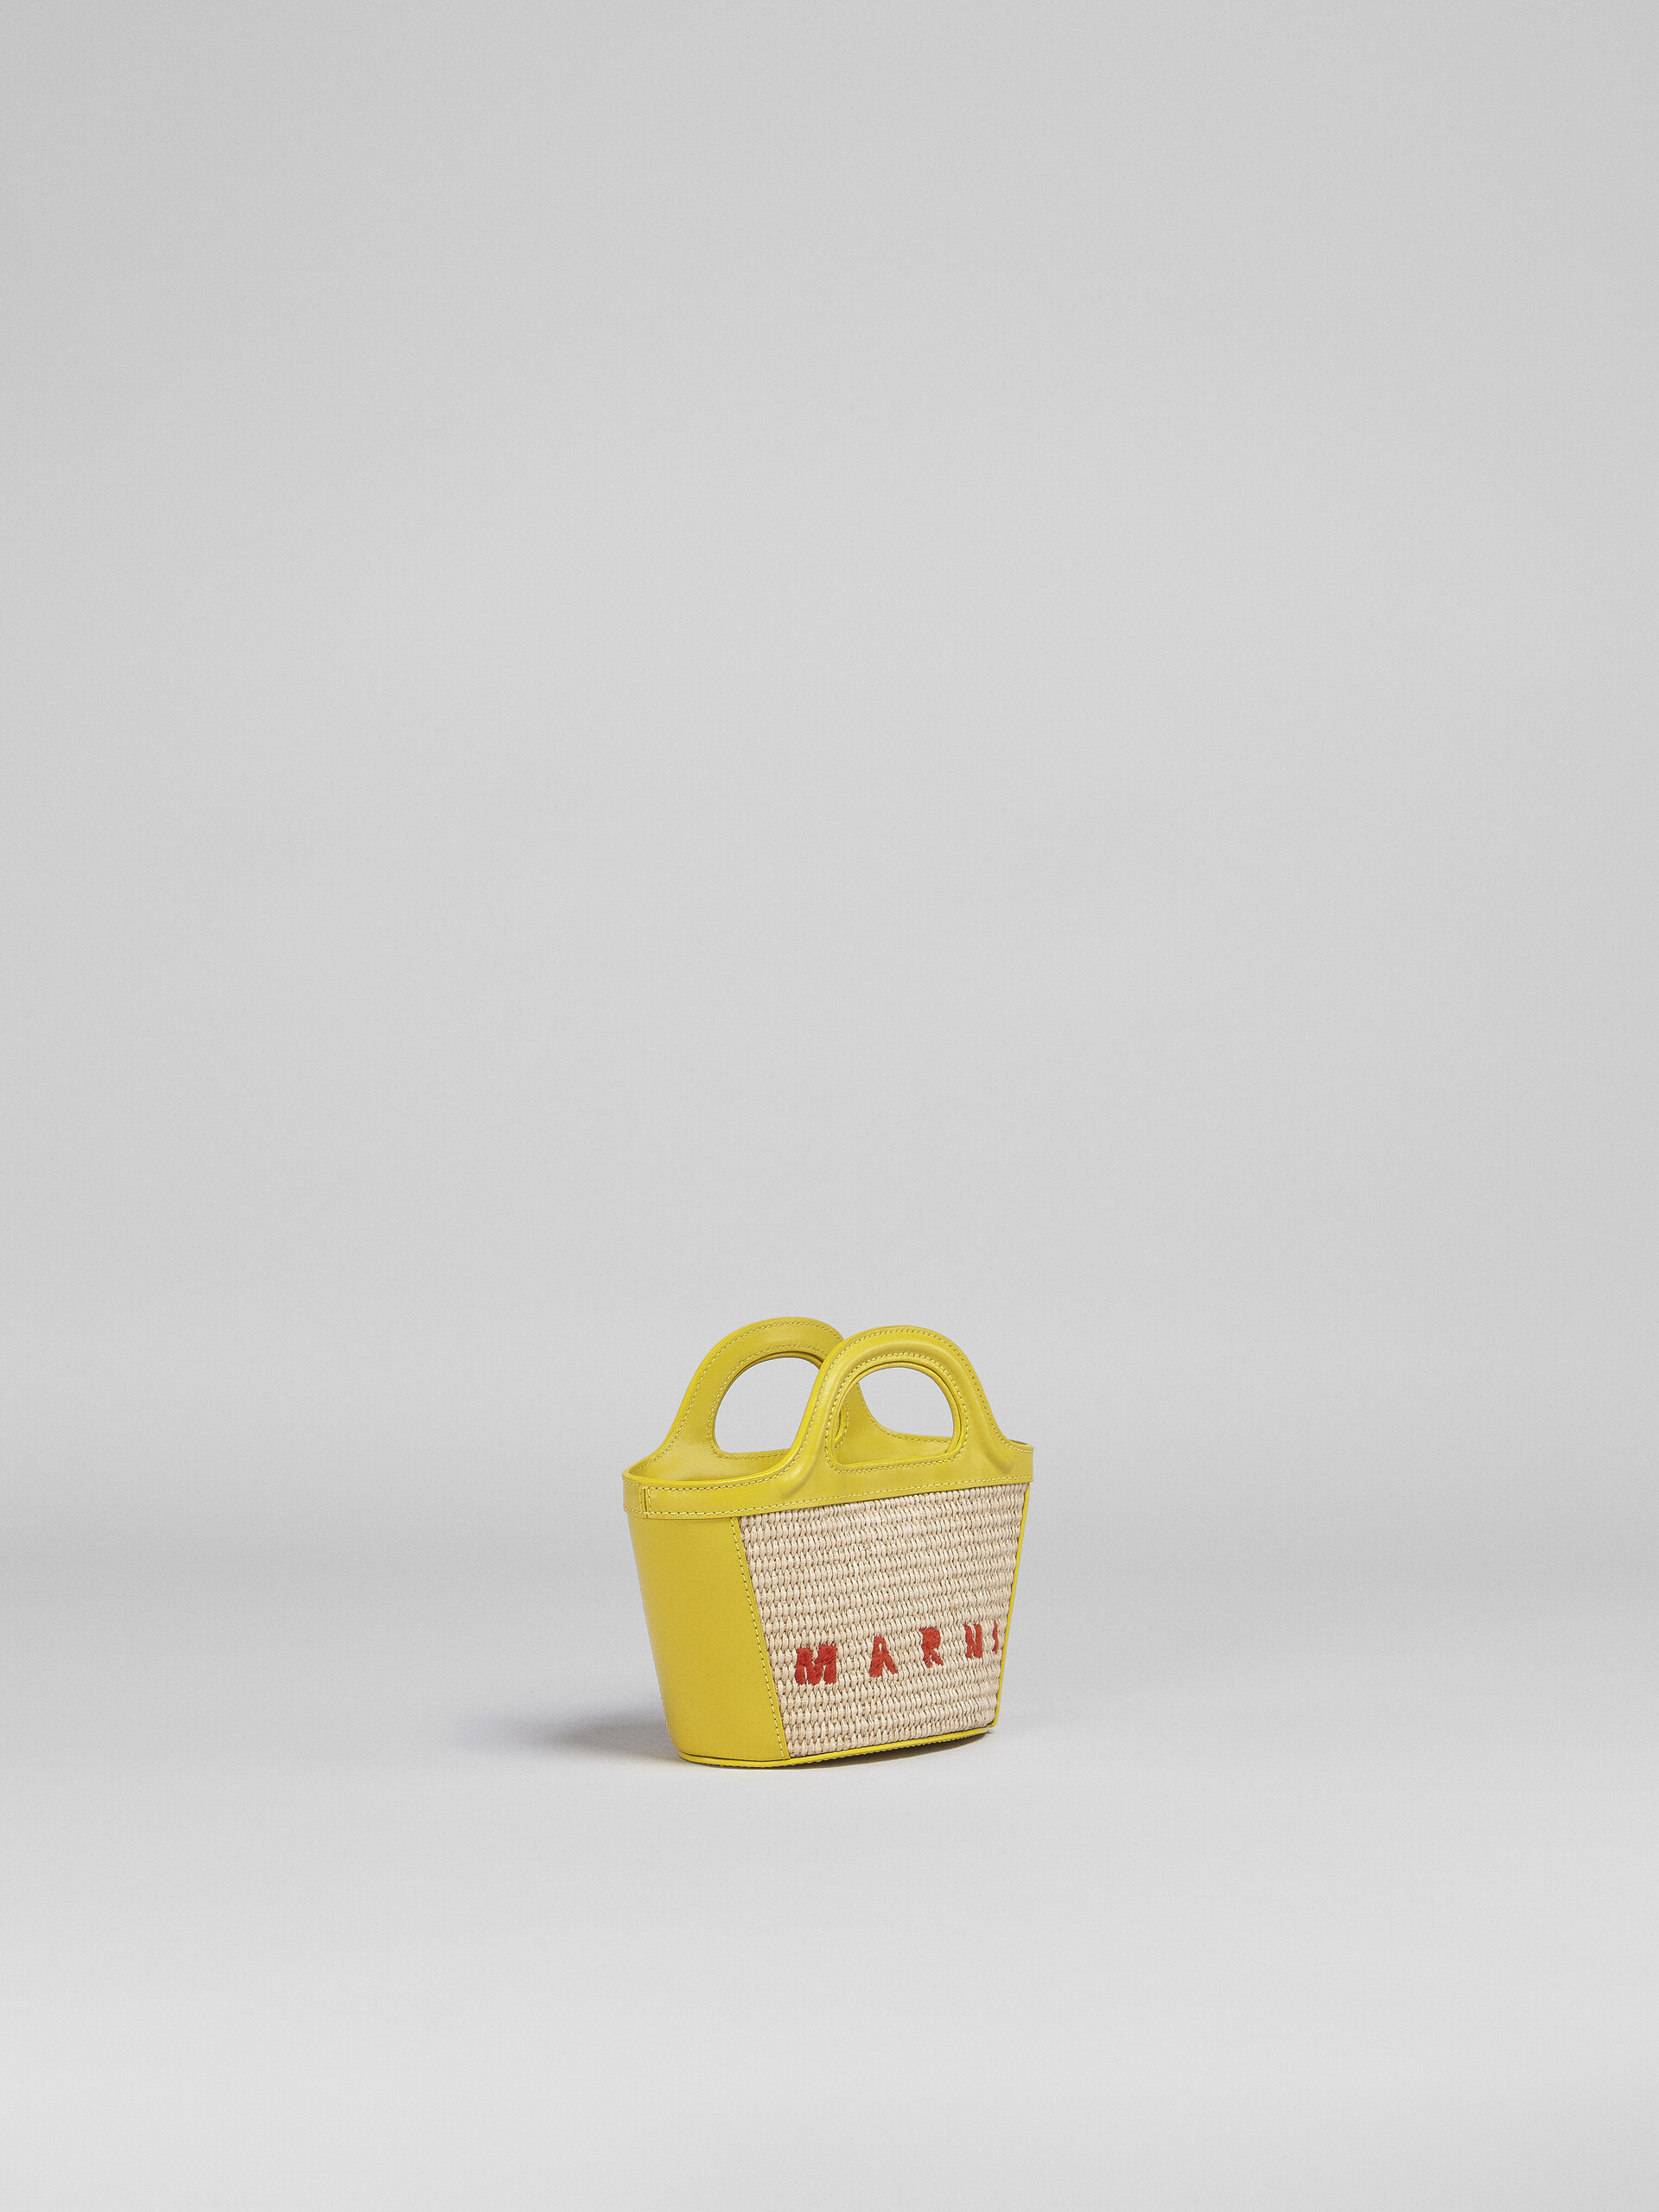 TROPICALIA micro bag in yellow leather and raffia - Handbags - Image 5